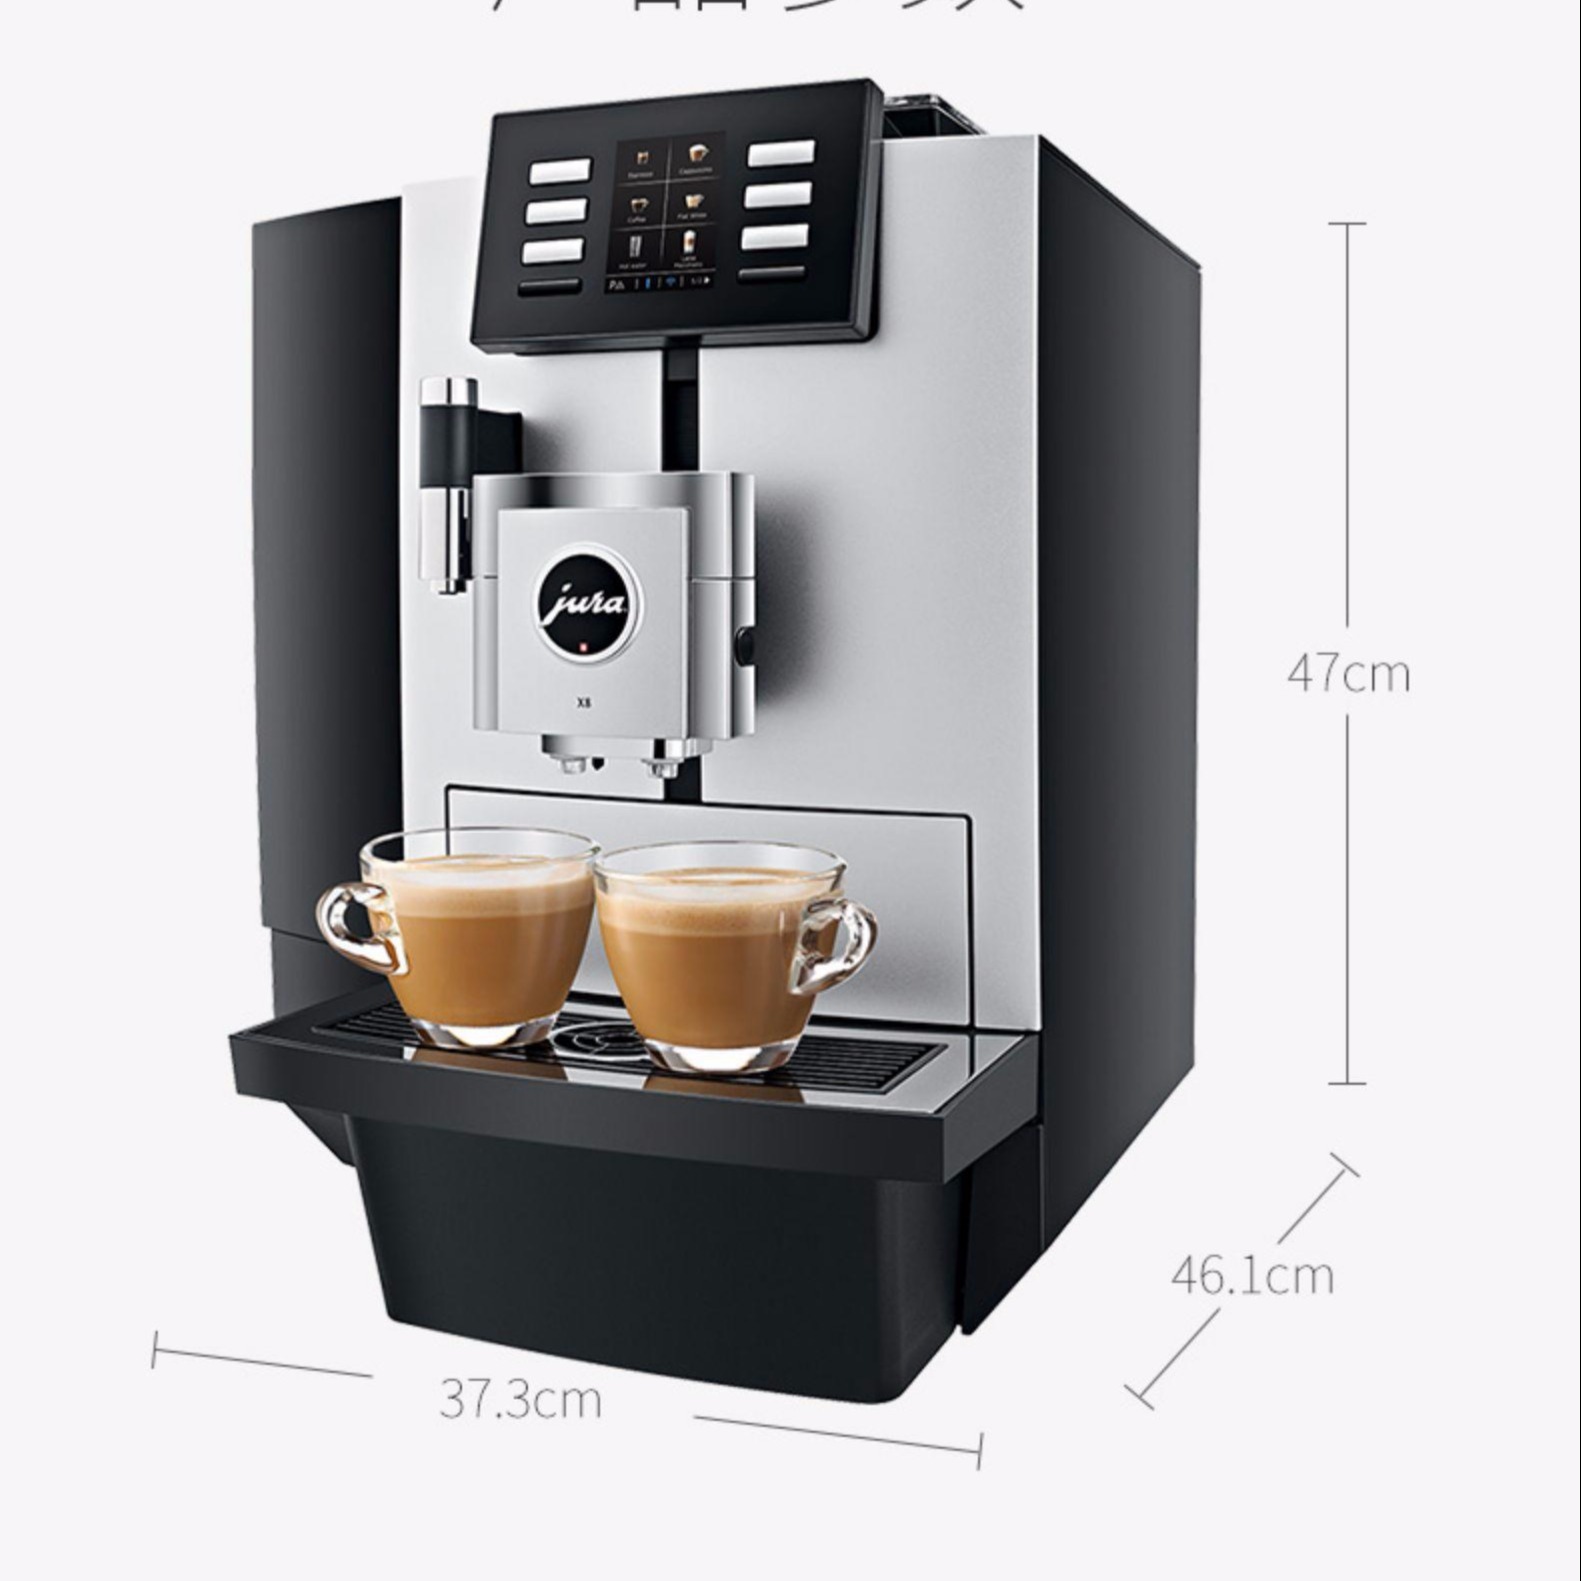 JURA优瑞X8全自动咖啡机 JURA优瑞瑞士进口咖啡机 JURA优瑞商用意式美式现磨全自动咖啡机图片